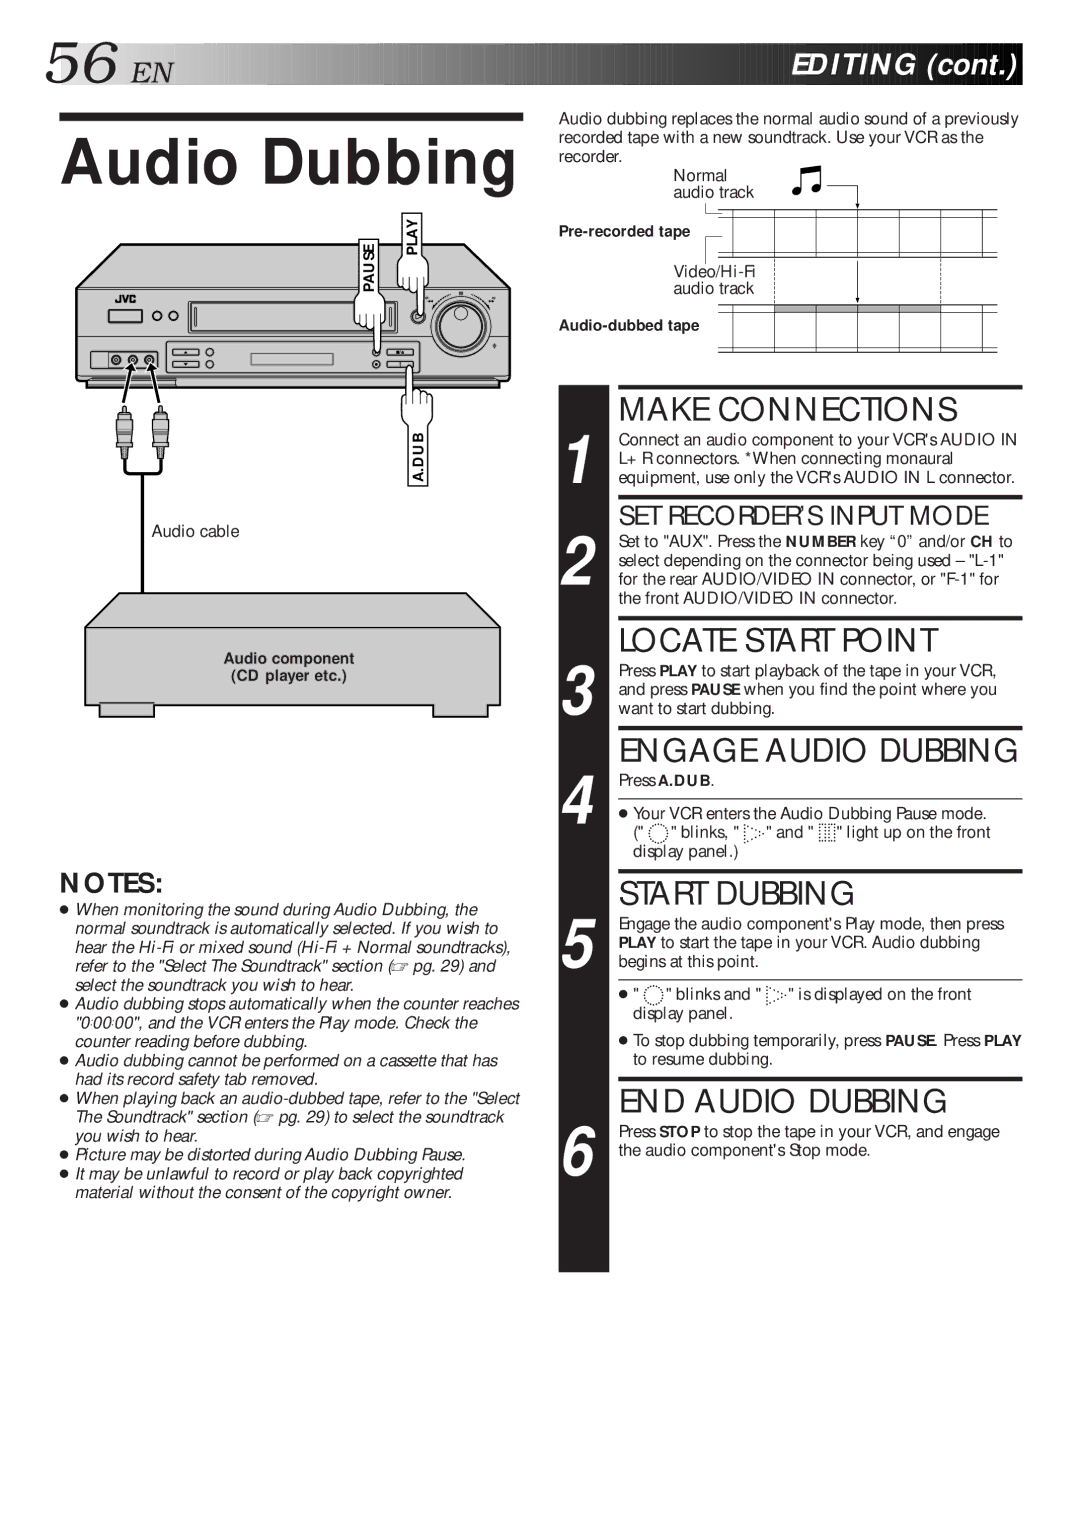 JVC HR-S4500U manual Engage Audio Dubbing, Start Dubbing, END Audio Dubbing 